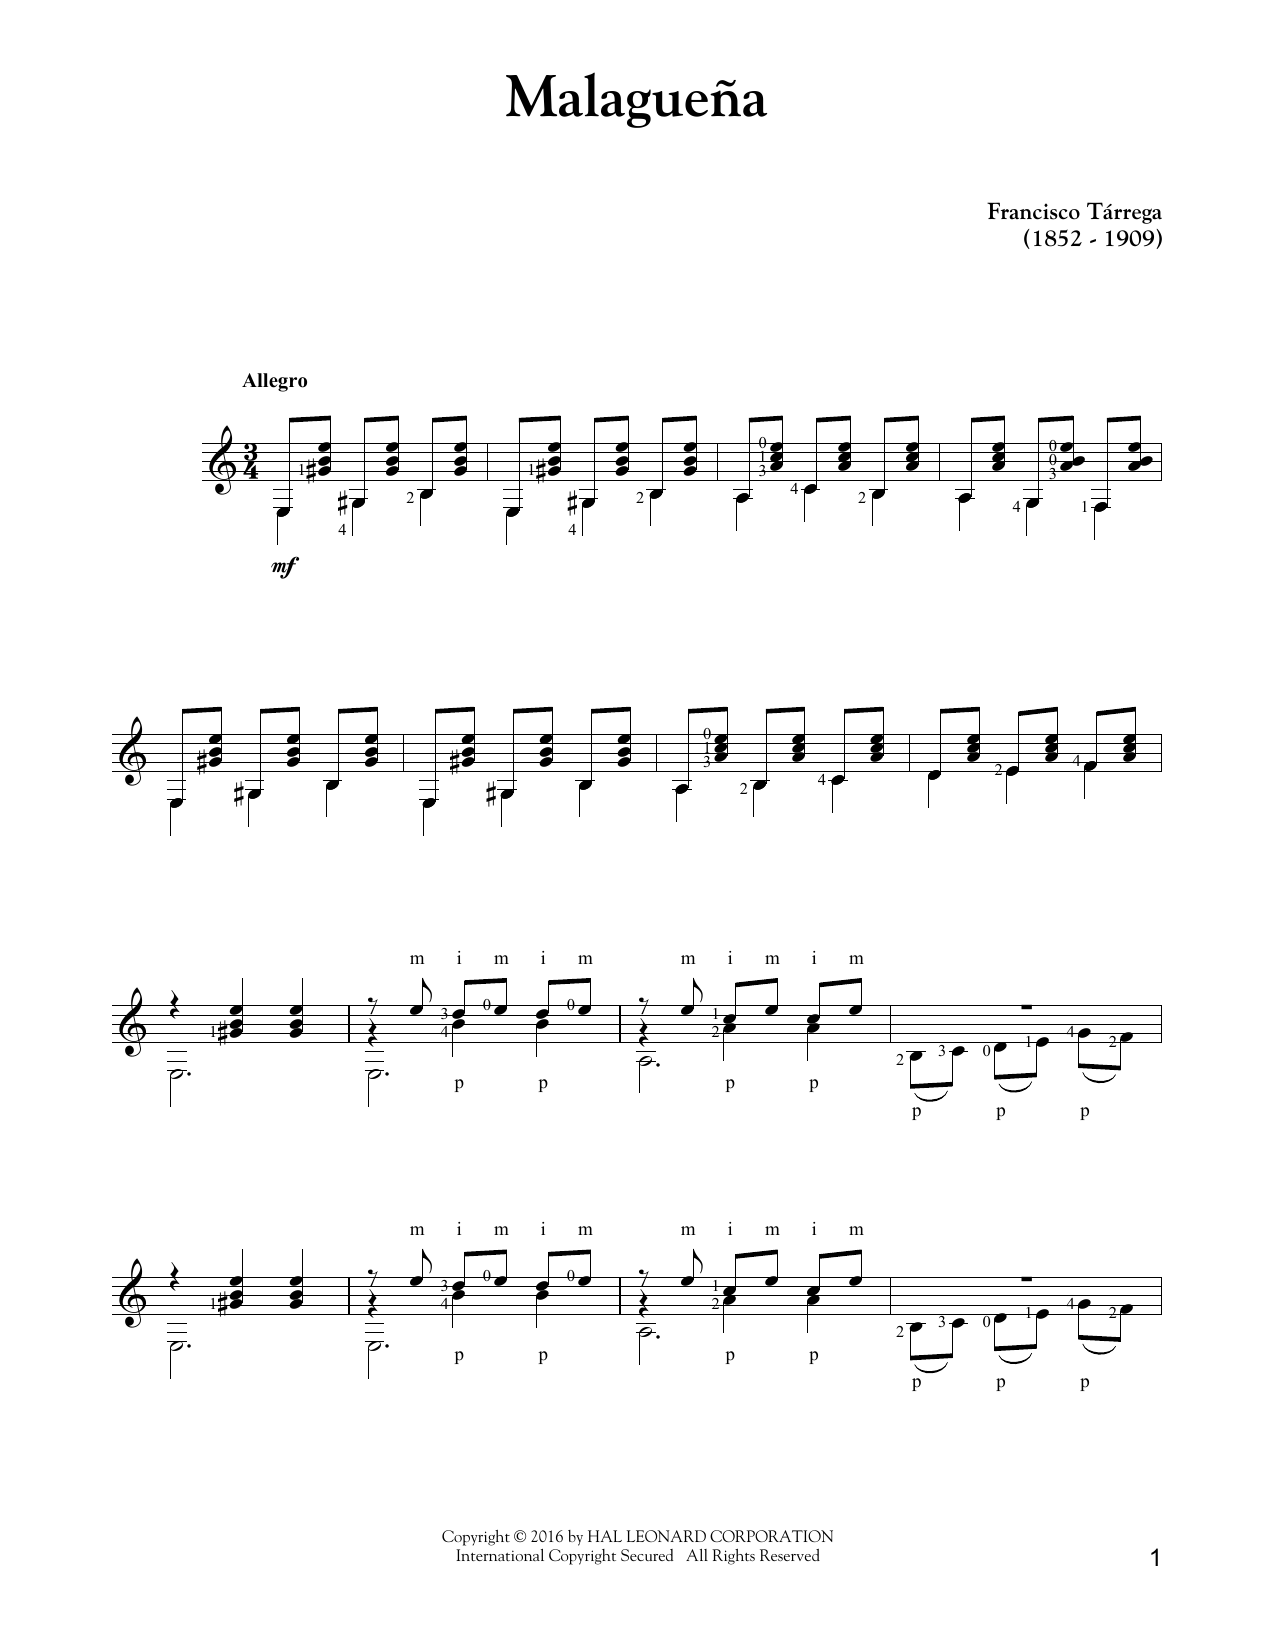 John Hill Malaguena Sheet Music Notes & Chords for Guitar Tab - Download or Print PDF